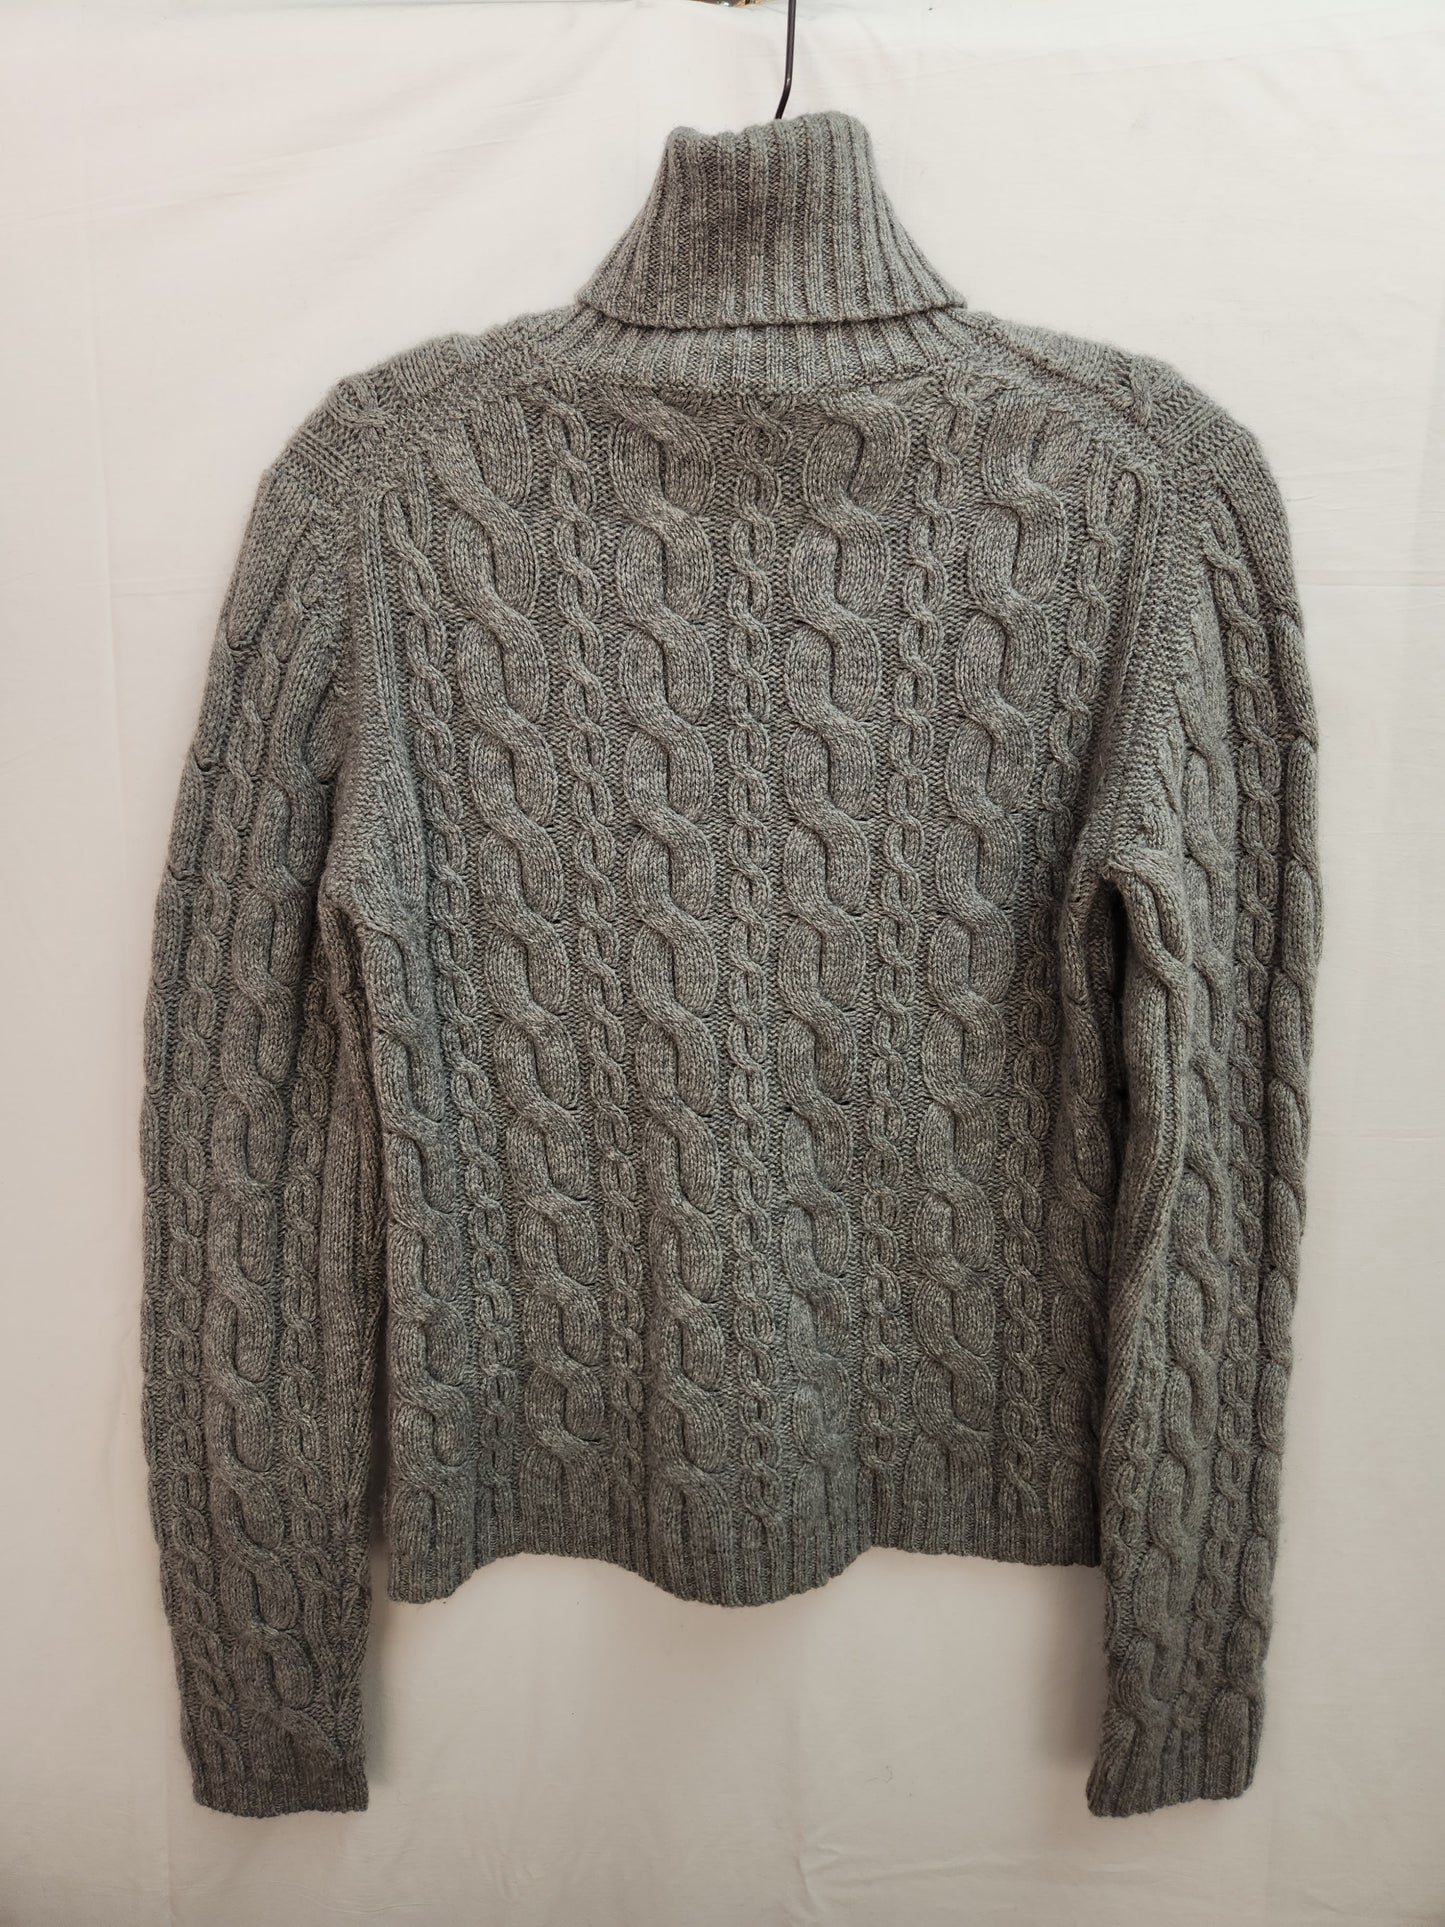 Autumn Cashmere Gray Cable Knit Fisherman Turtleneck Sweater - Size: M